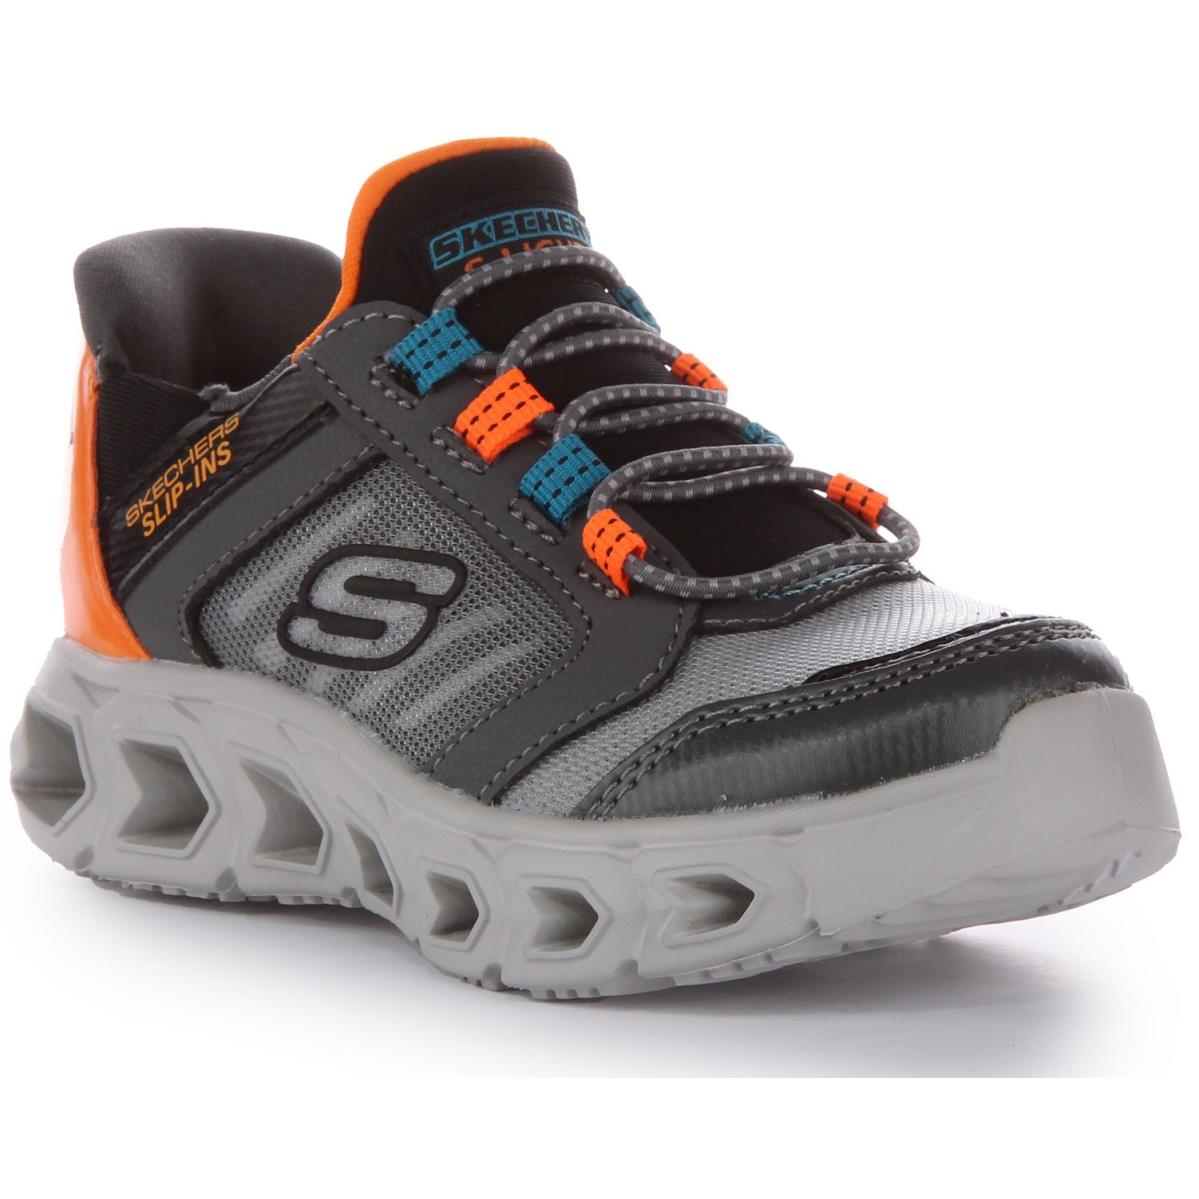 Skechers Hypno-flash 2.0 Odelux Light Up Shoe Charcoal Kids US 0.5C - 13.5C CHARCOAL